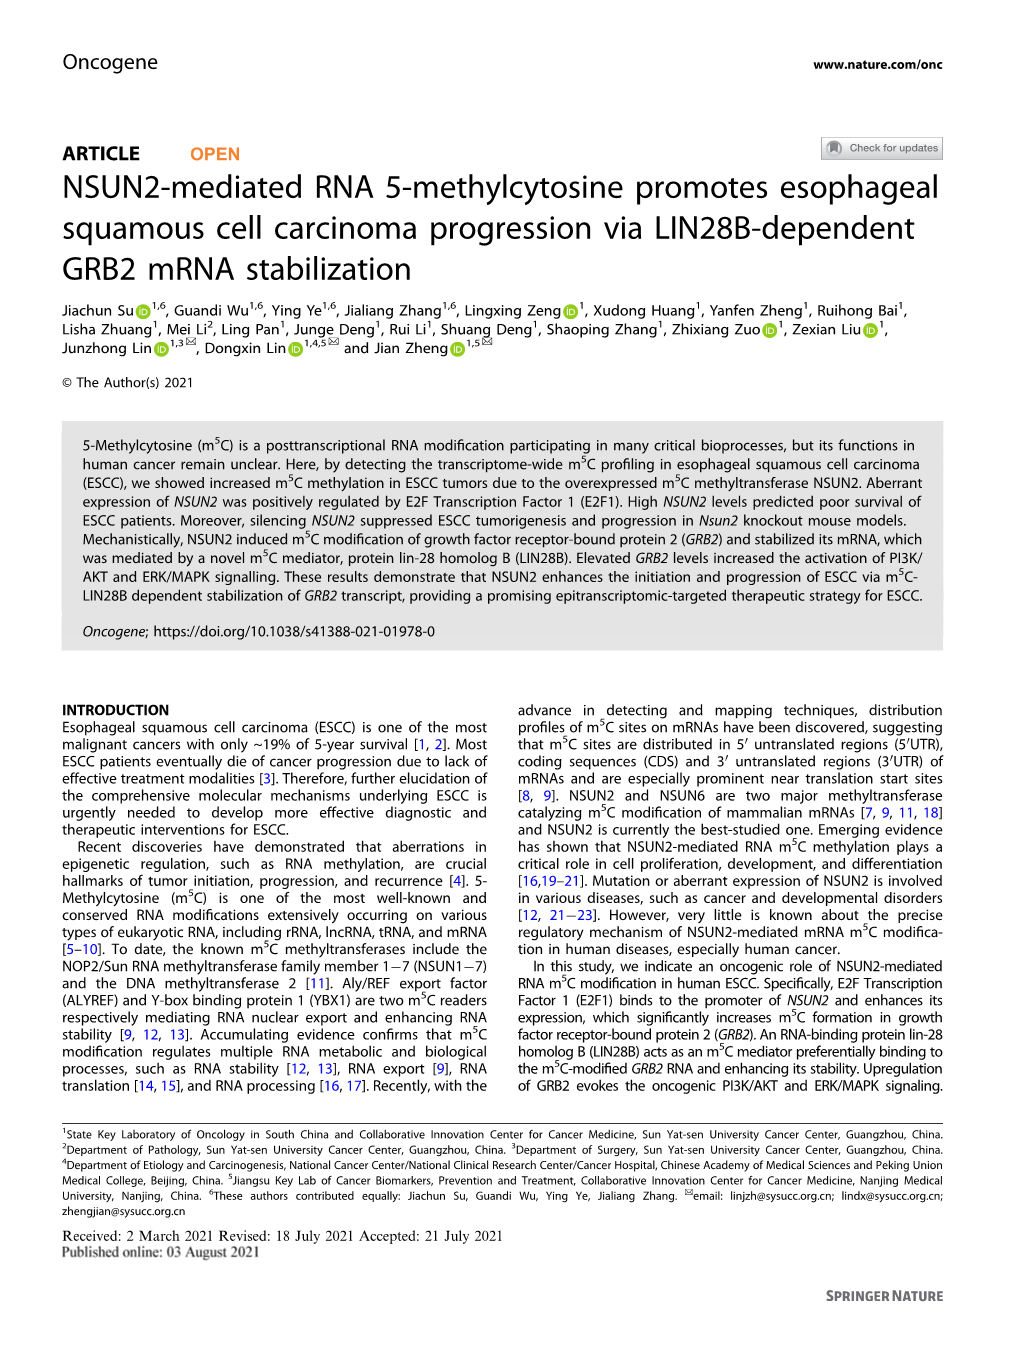 NSUN2-Mediated RNA 5-Methylcytosine Promotes Esophageal Squamous Cell Carcinoma Progression Via LIN28B-Dependent GRB2 Mrna Stabilization